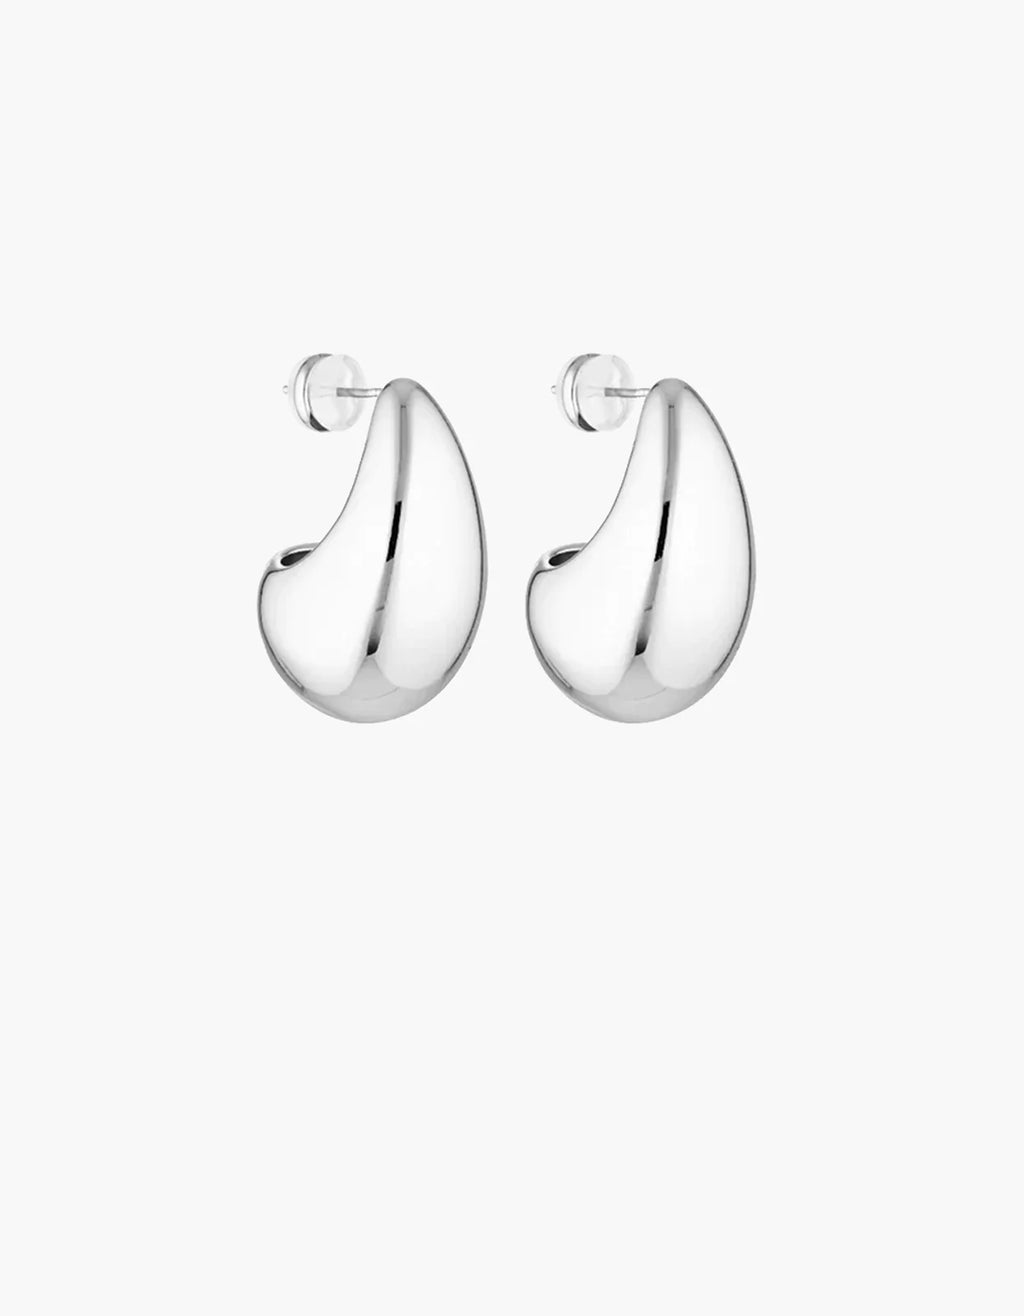 Porter - Blob Earrings - Silver